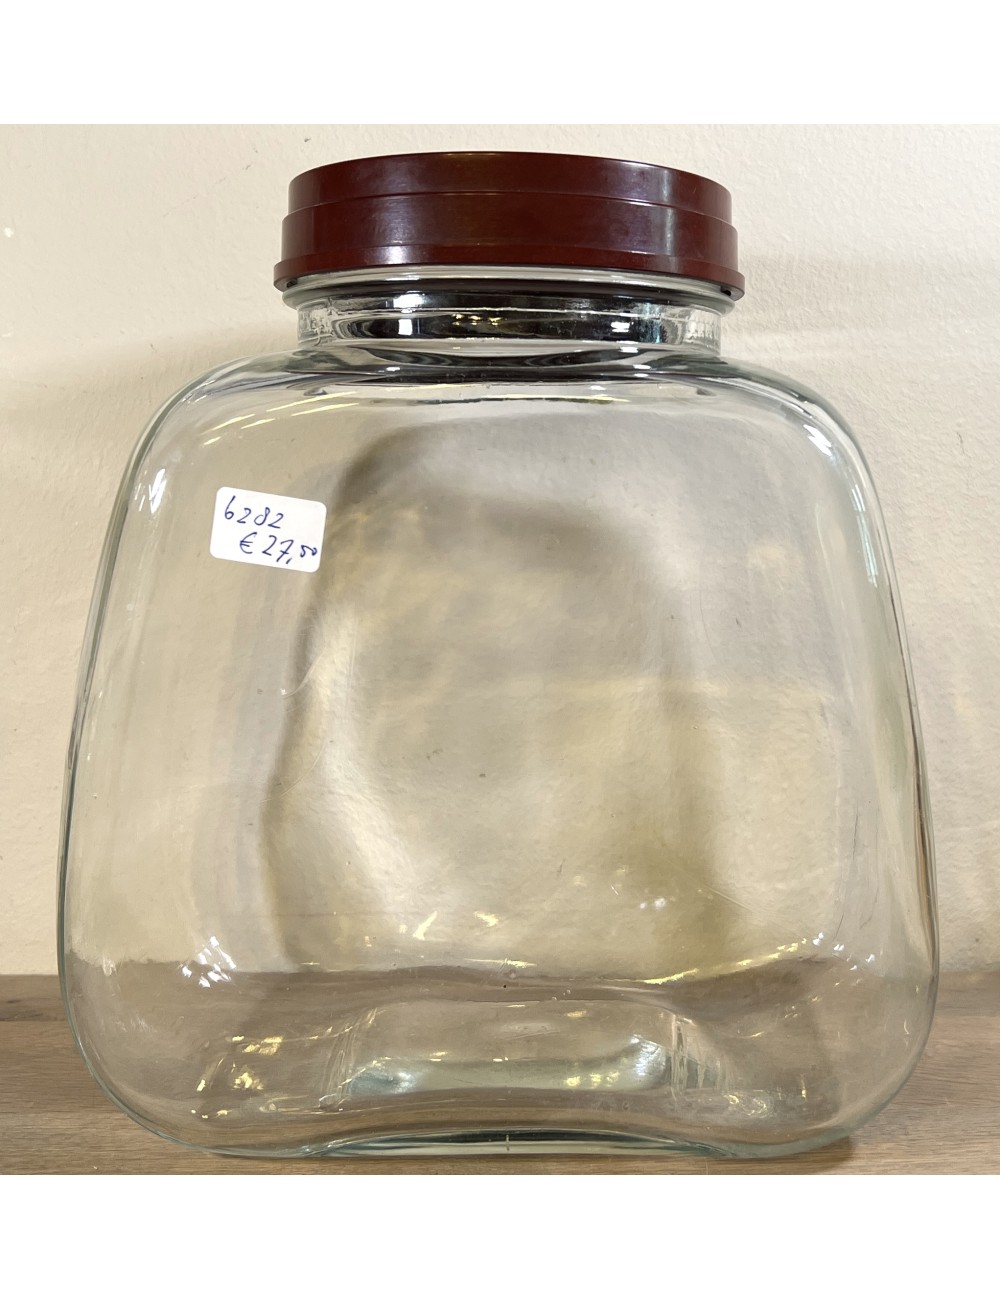 Storage jar / Candy jar - large glass model with bakelite lid